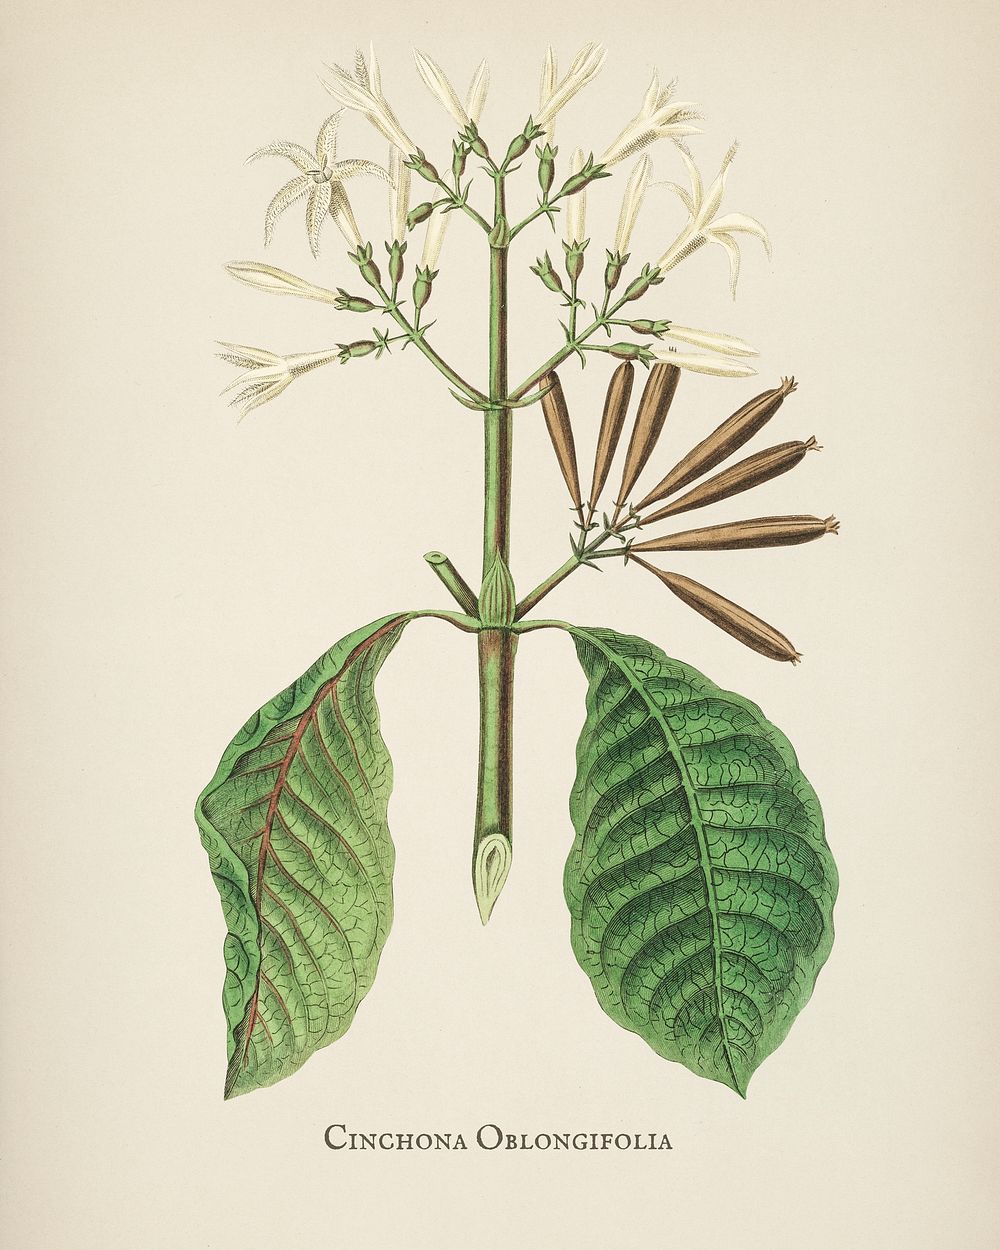 Quina (Cinchona oblongifolia) illustration from Medical Botany (1836) by John Stephenson and James Morss Churchill.